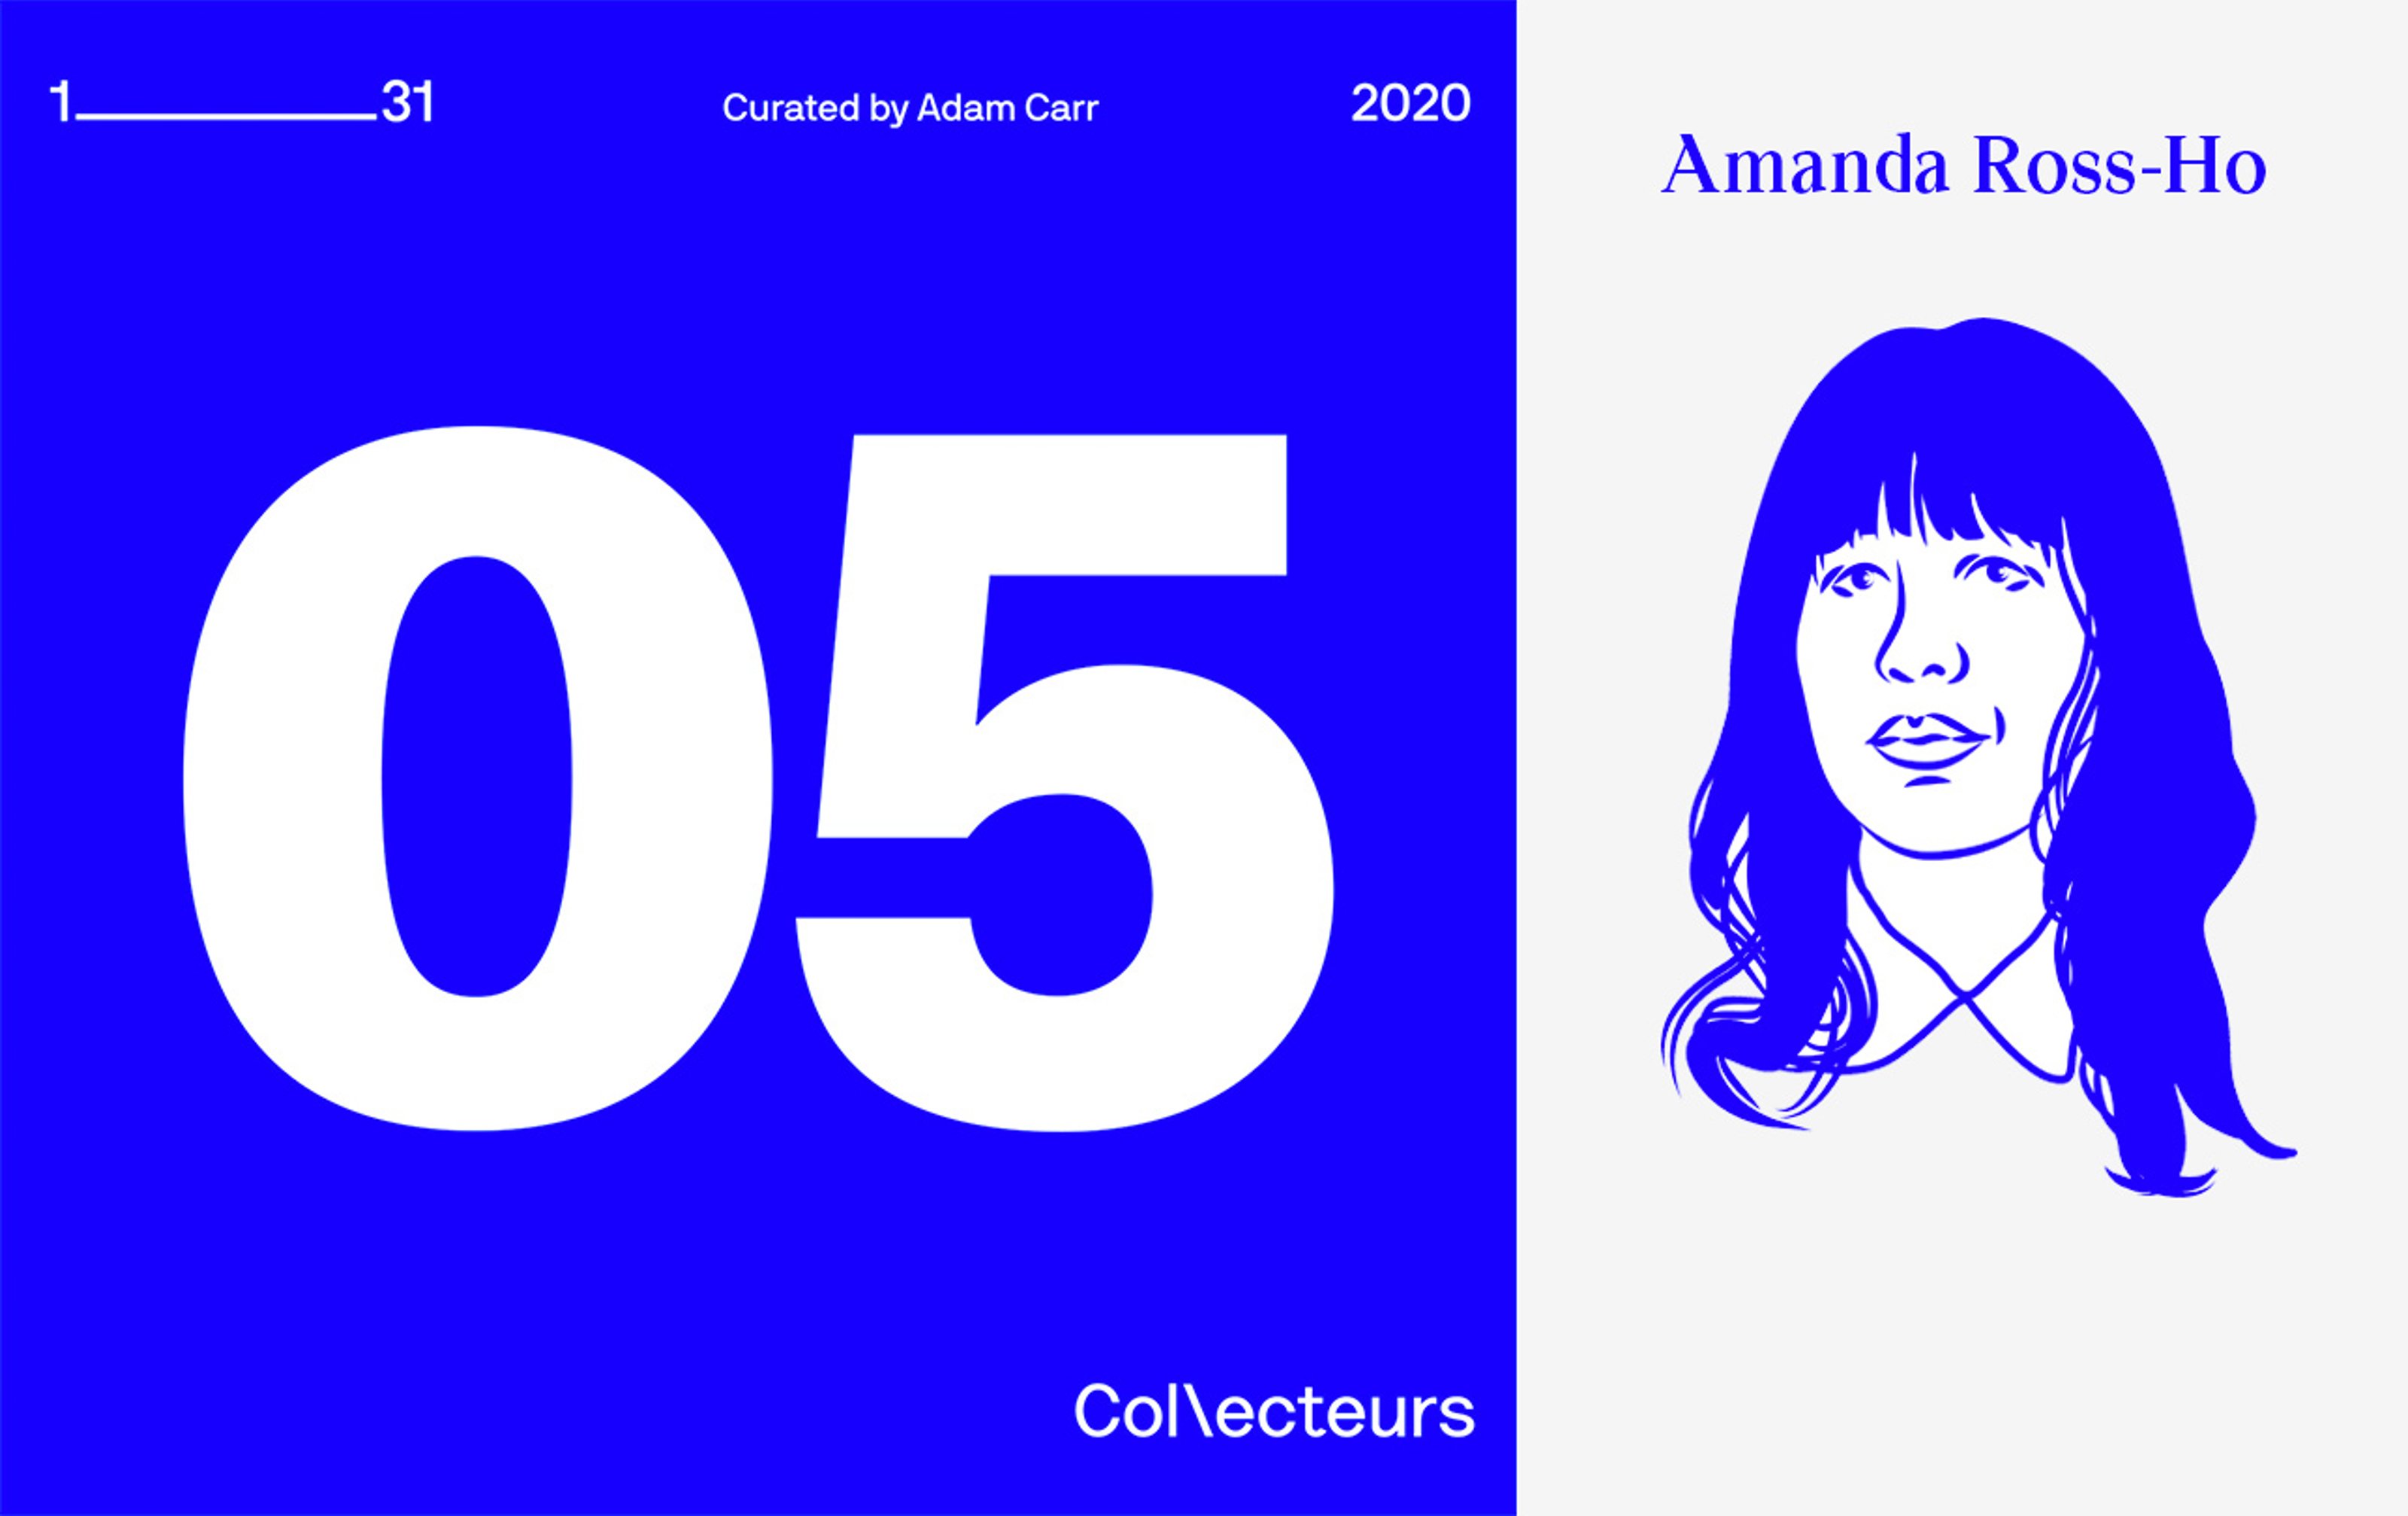 05 - Illustrated portrait of Amanda Ross-Ho